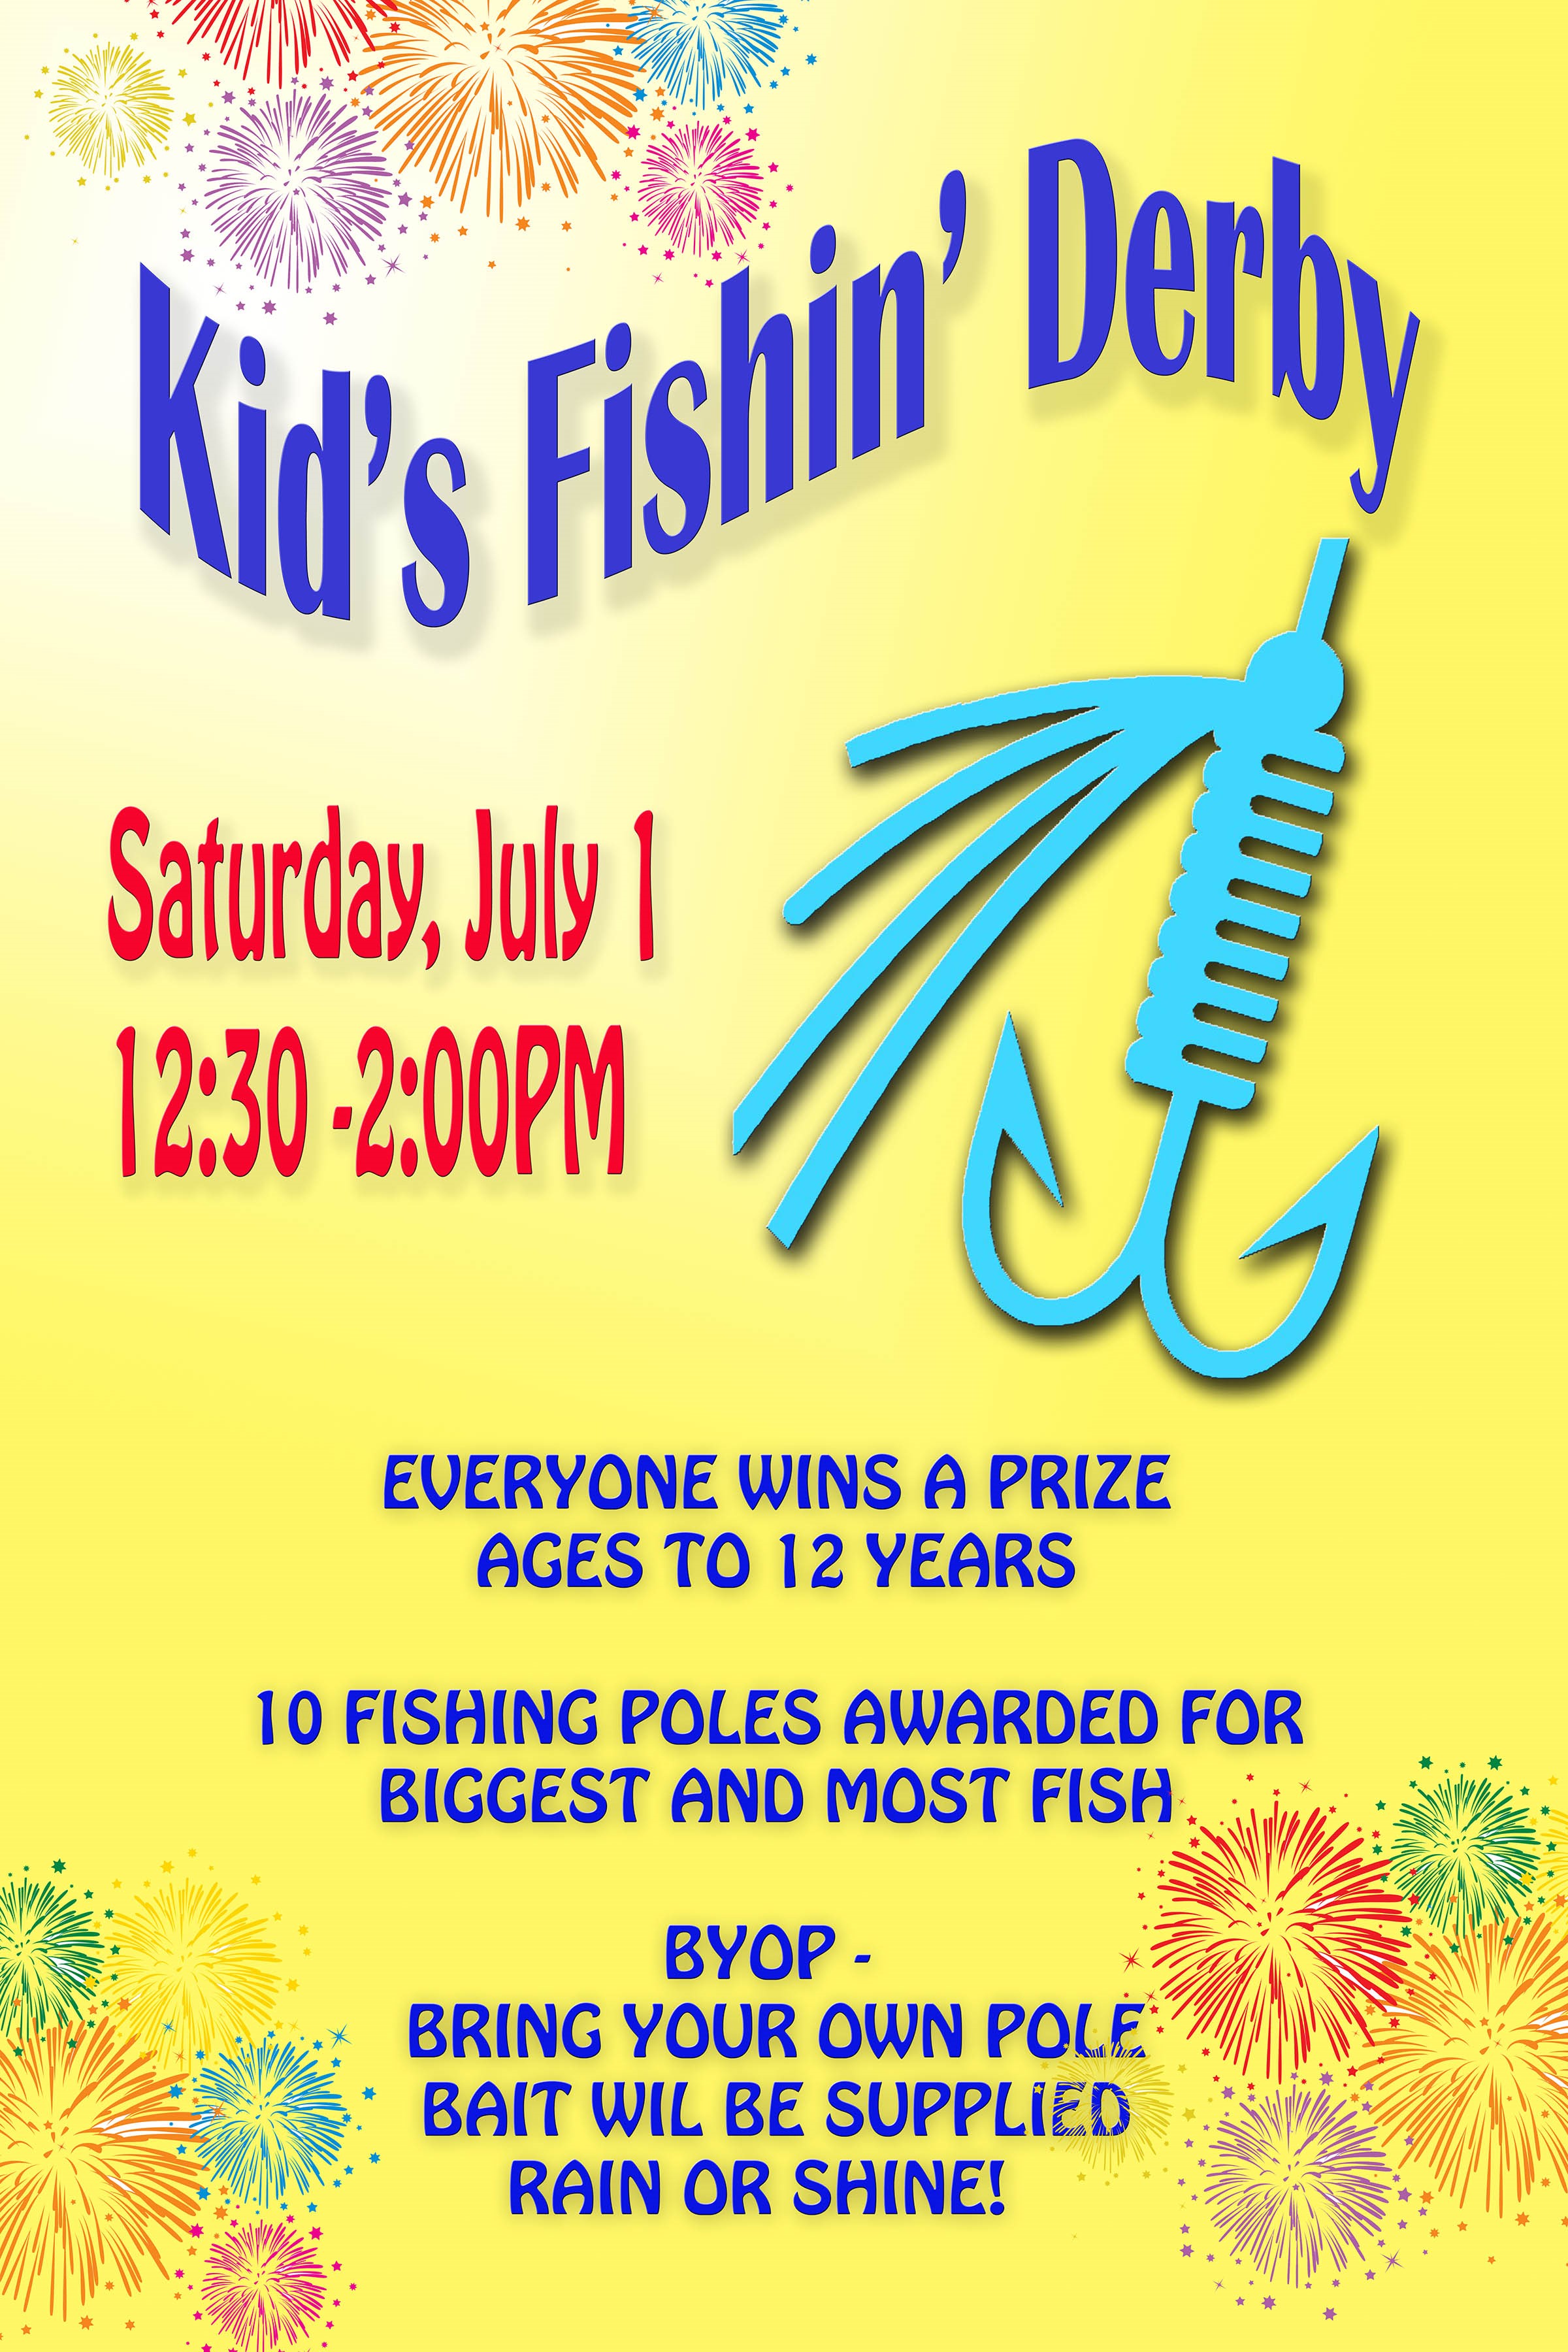 Port Clinton Yacht Club - Calendar Event - Kid's Fishing Derby